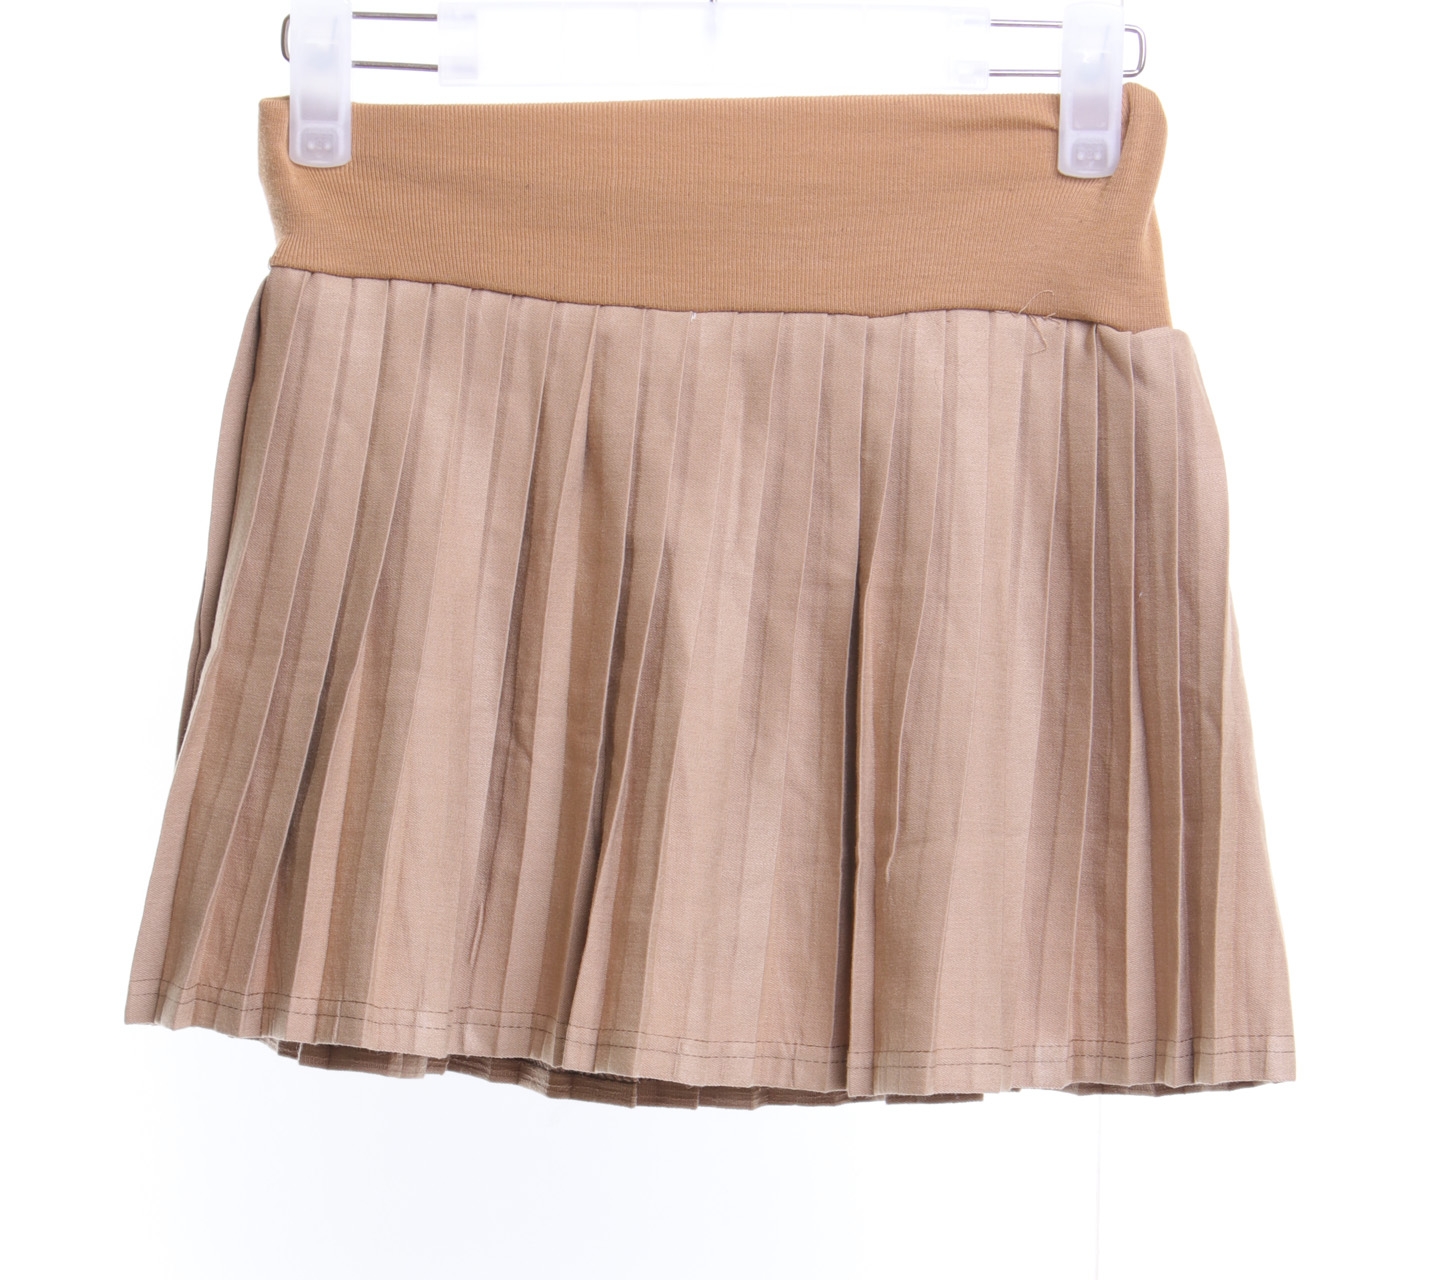 J.REP Light Brown Pleated Mini Skirt